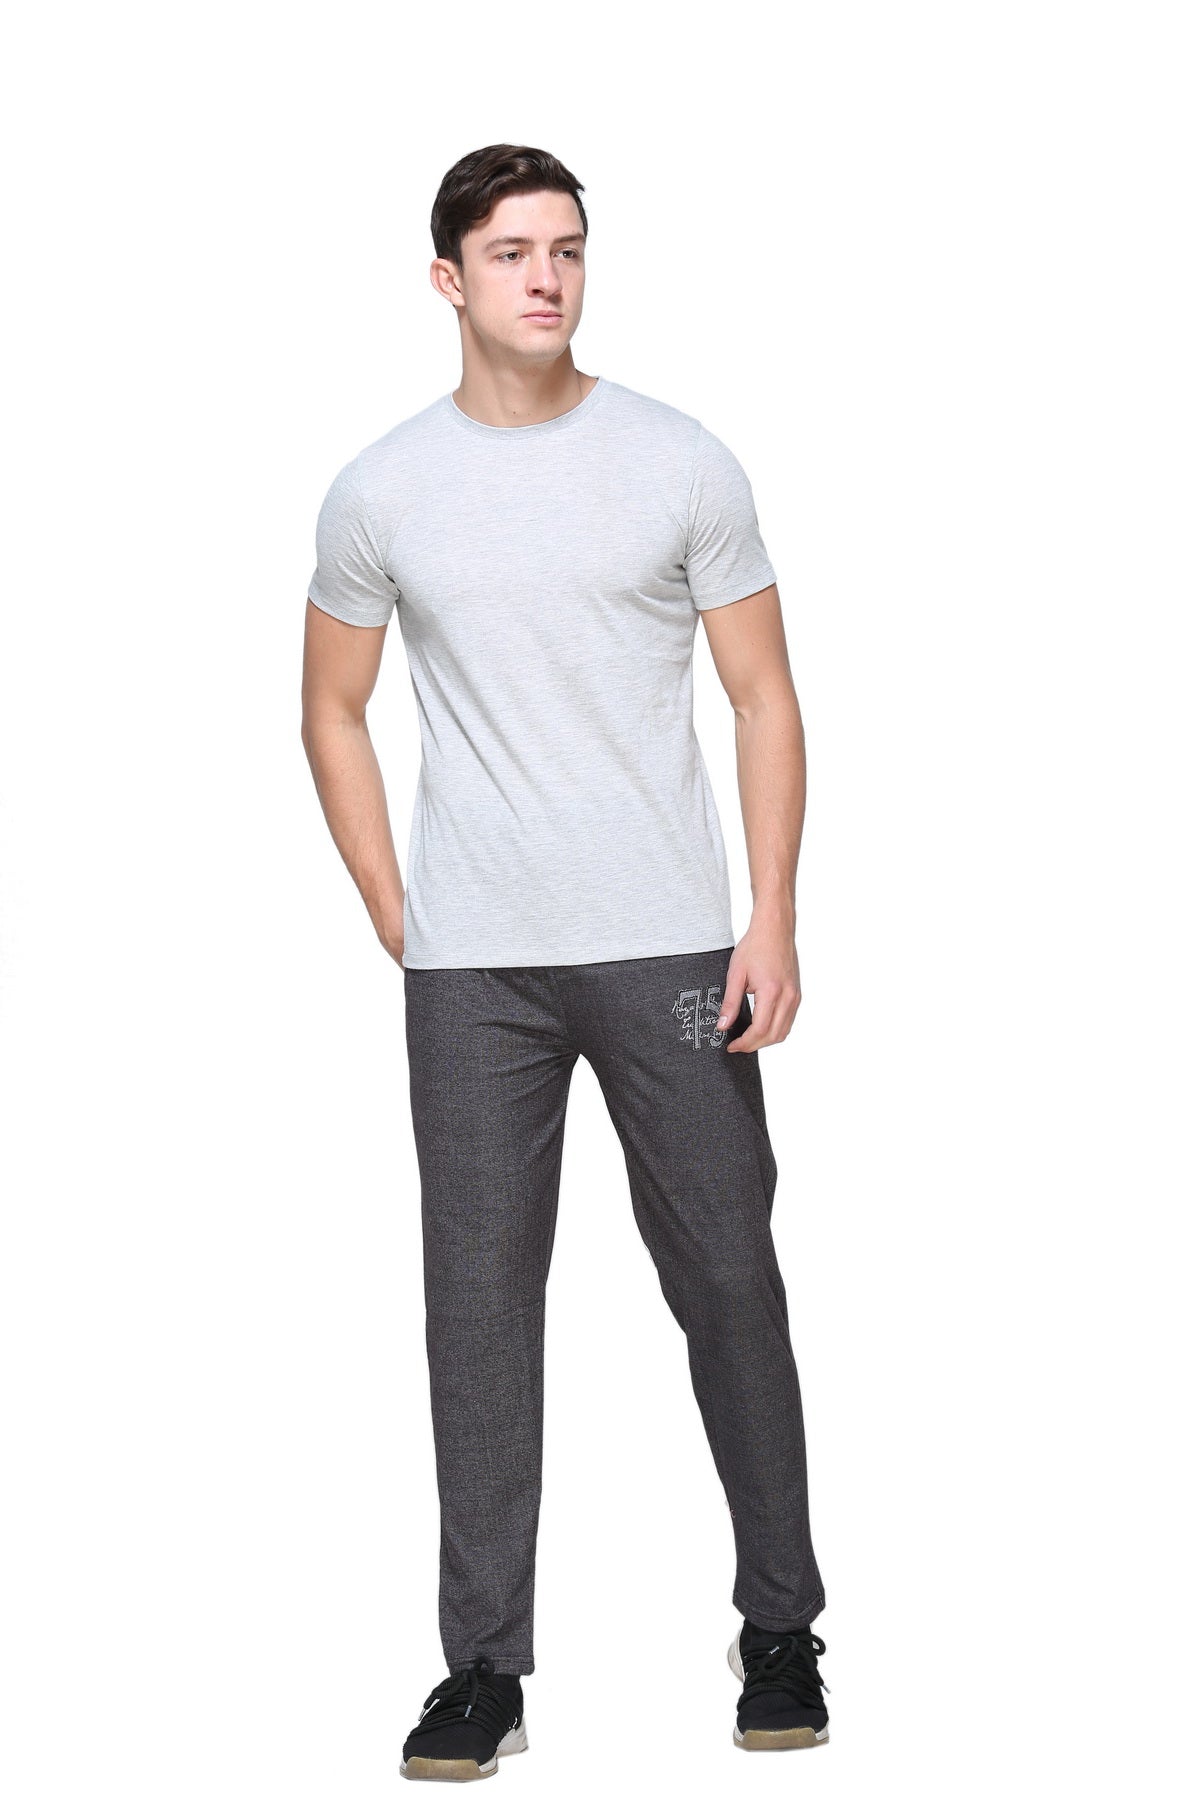 Jockey Men's Cotton Track Pants : Amazon.in: Fashion